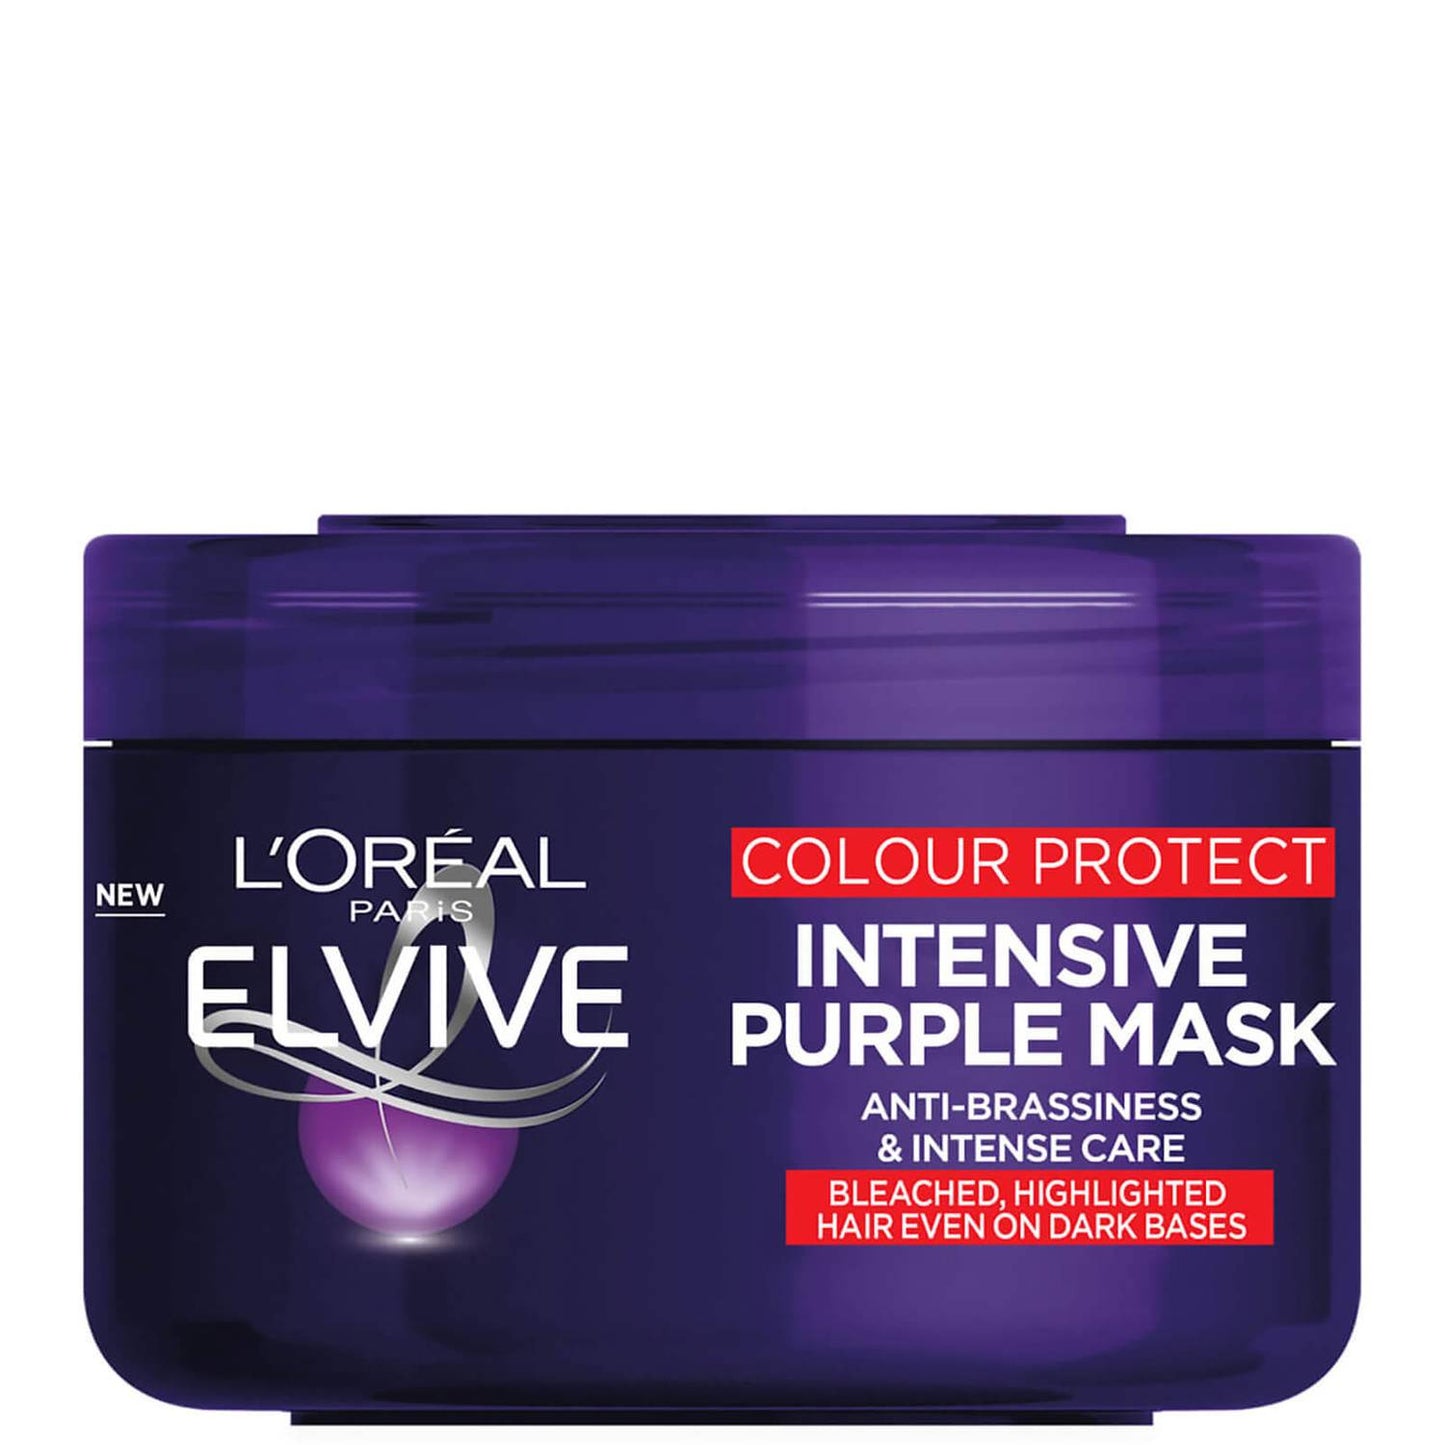 Elvive Colour Protect Anti-Brassiness Purple Mask